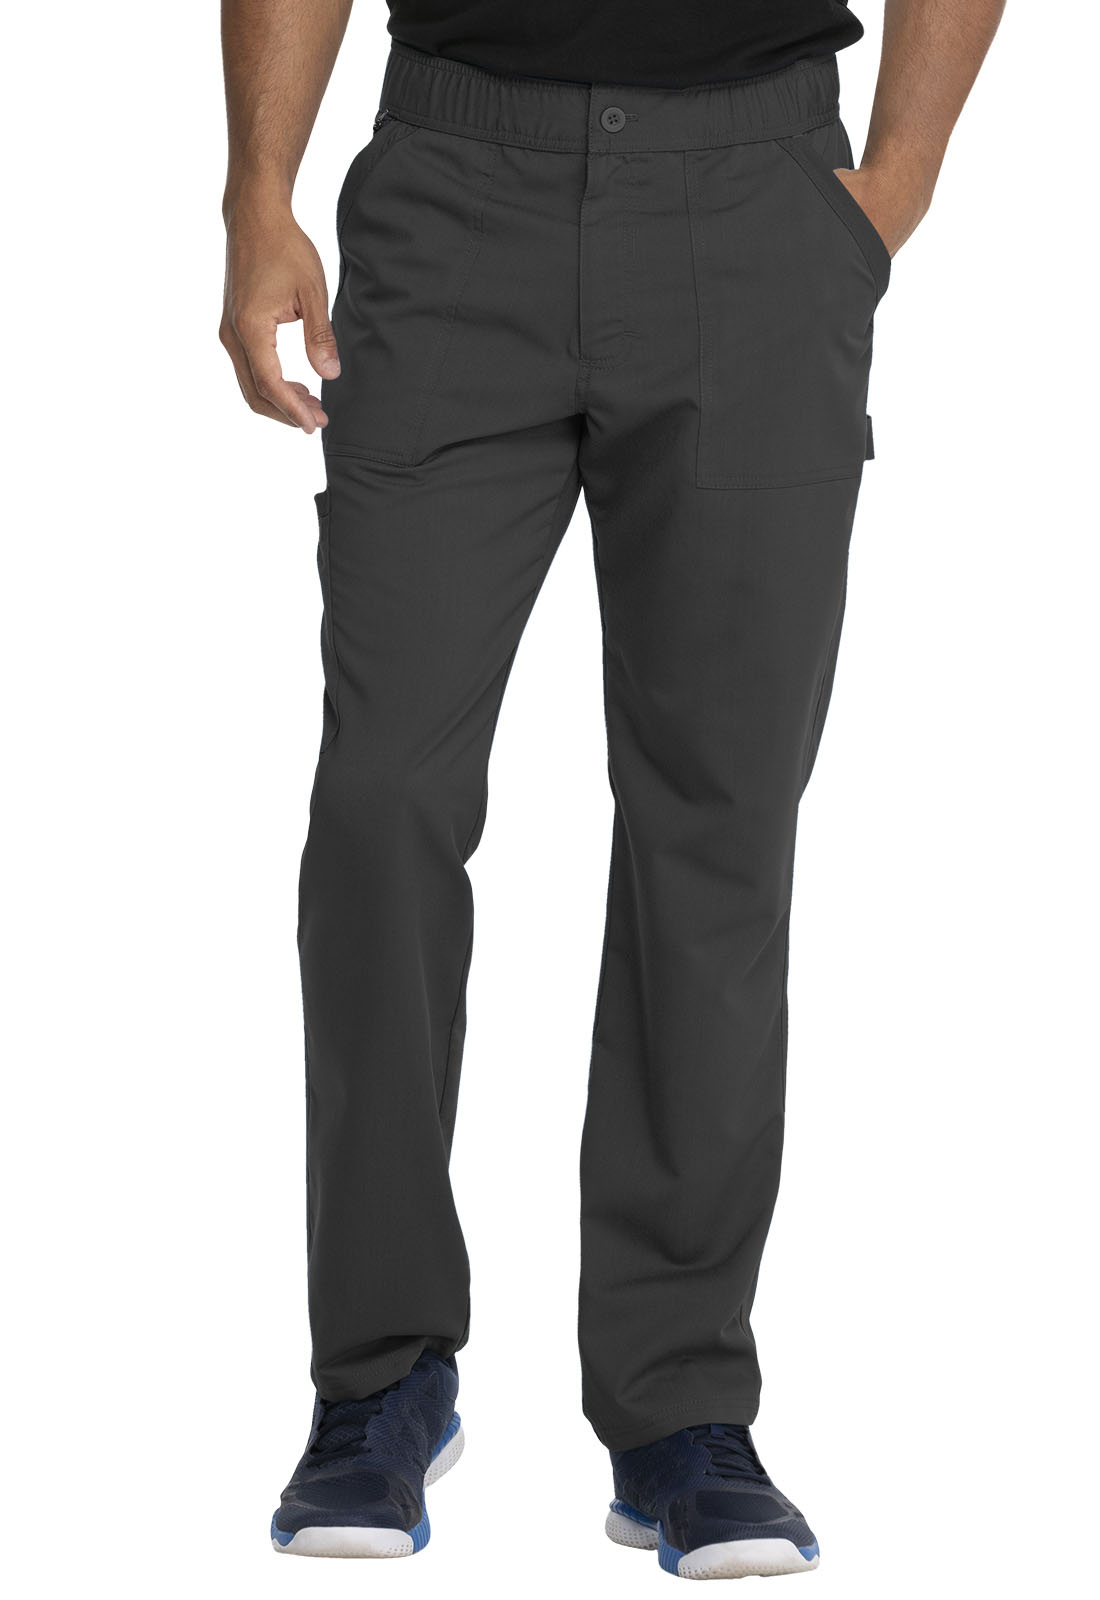 Мужские медицинские брюки DK220 Dickies Balance Men's в интернет-бутике Clinic Style